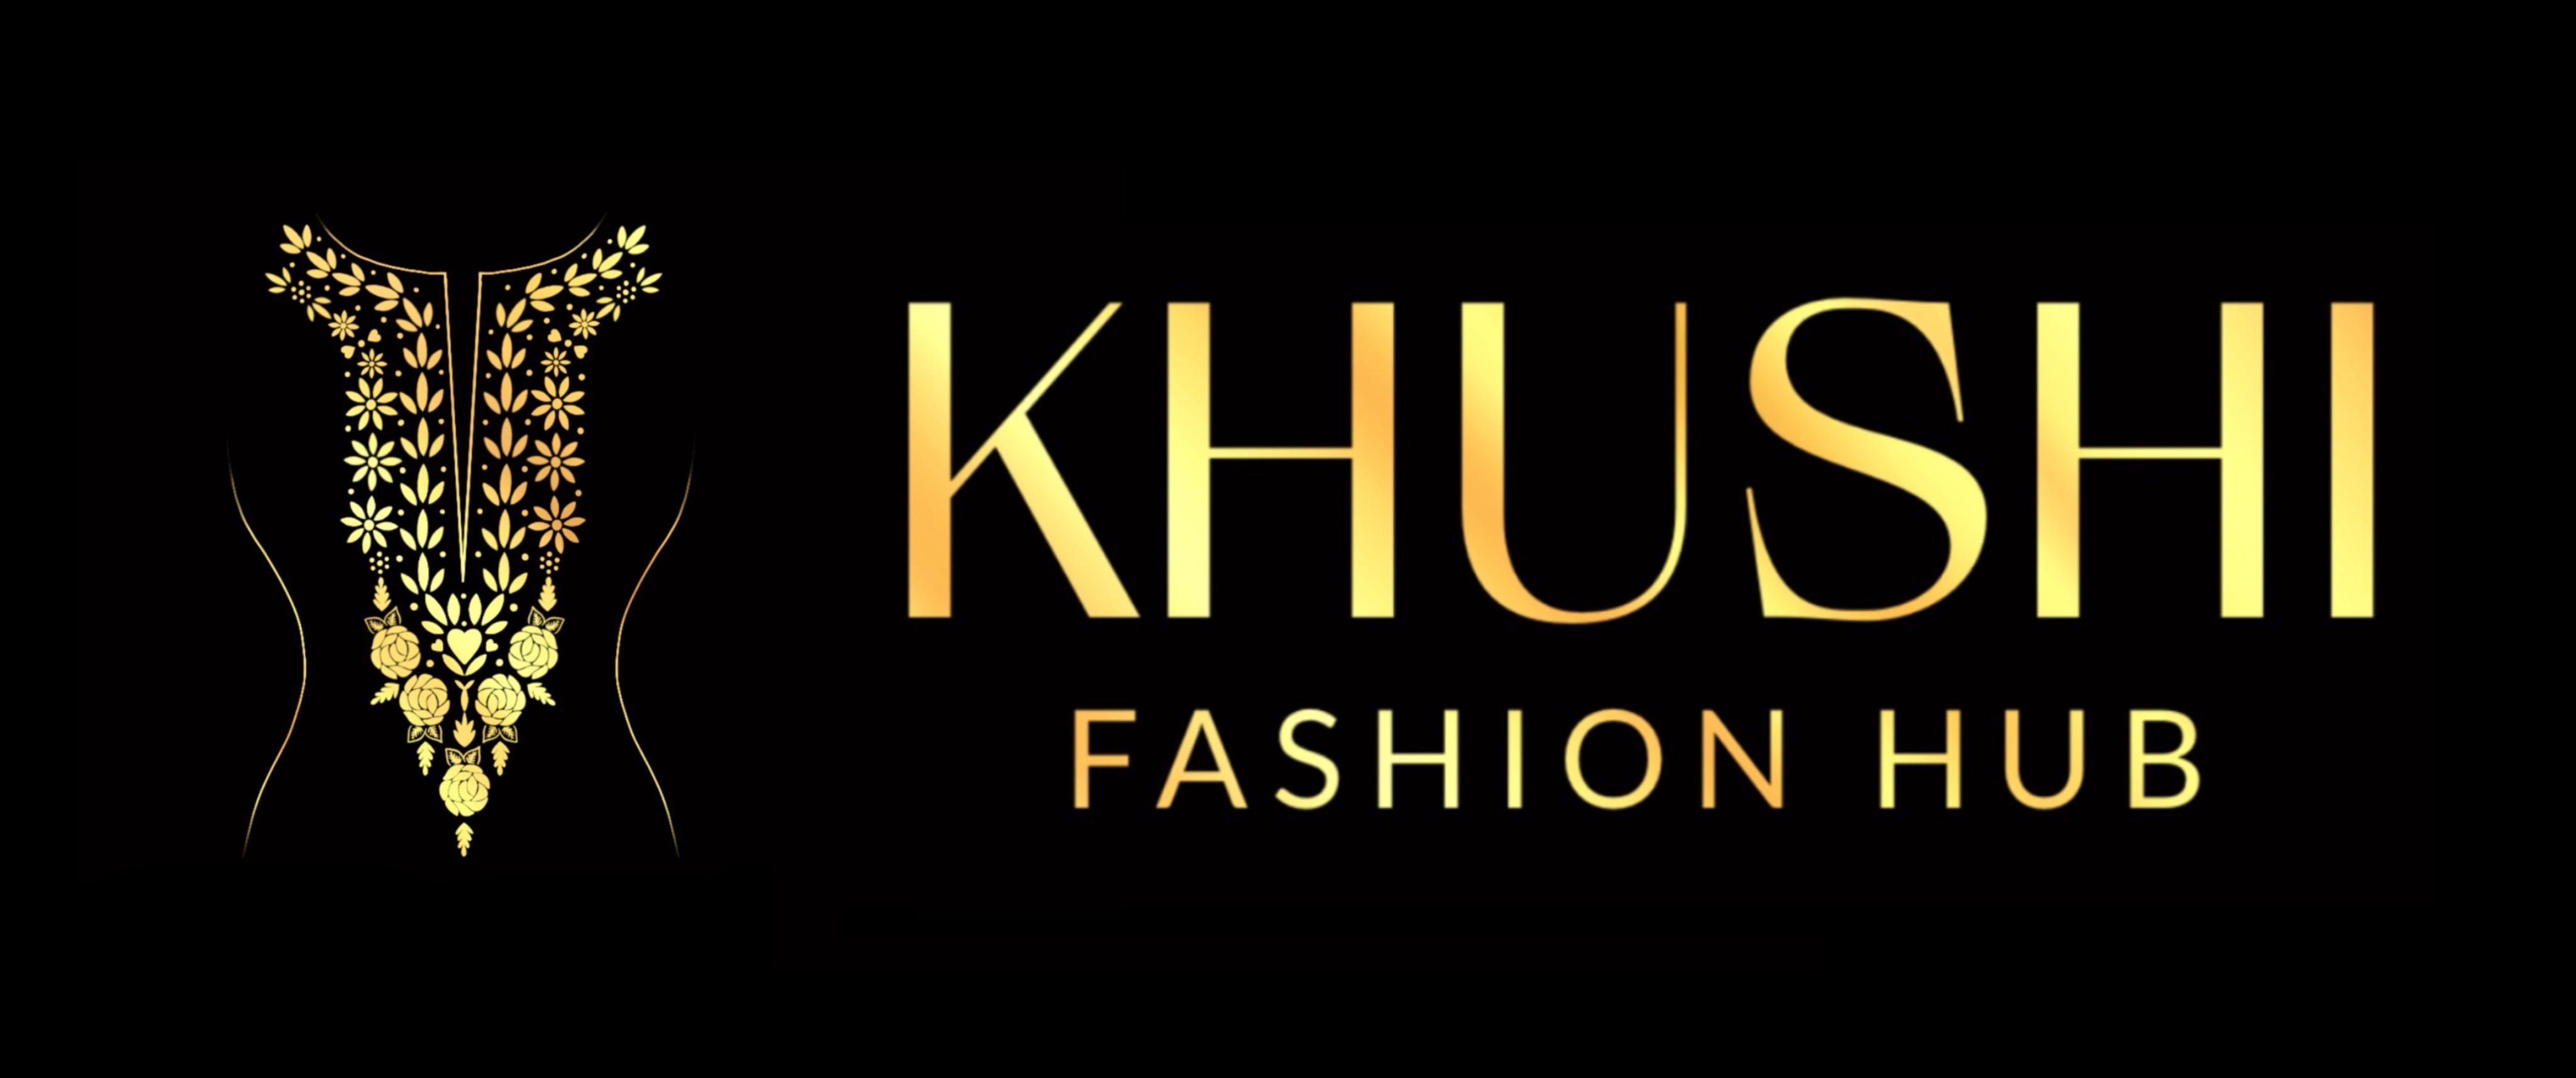 KHUSHI name brand logo #shorts #brand #logo - YouTube